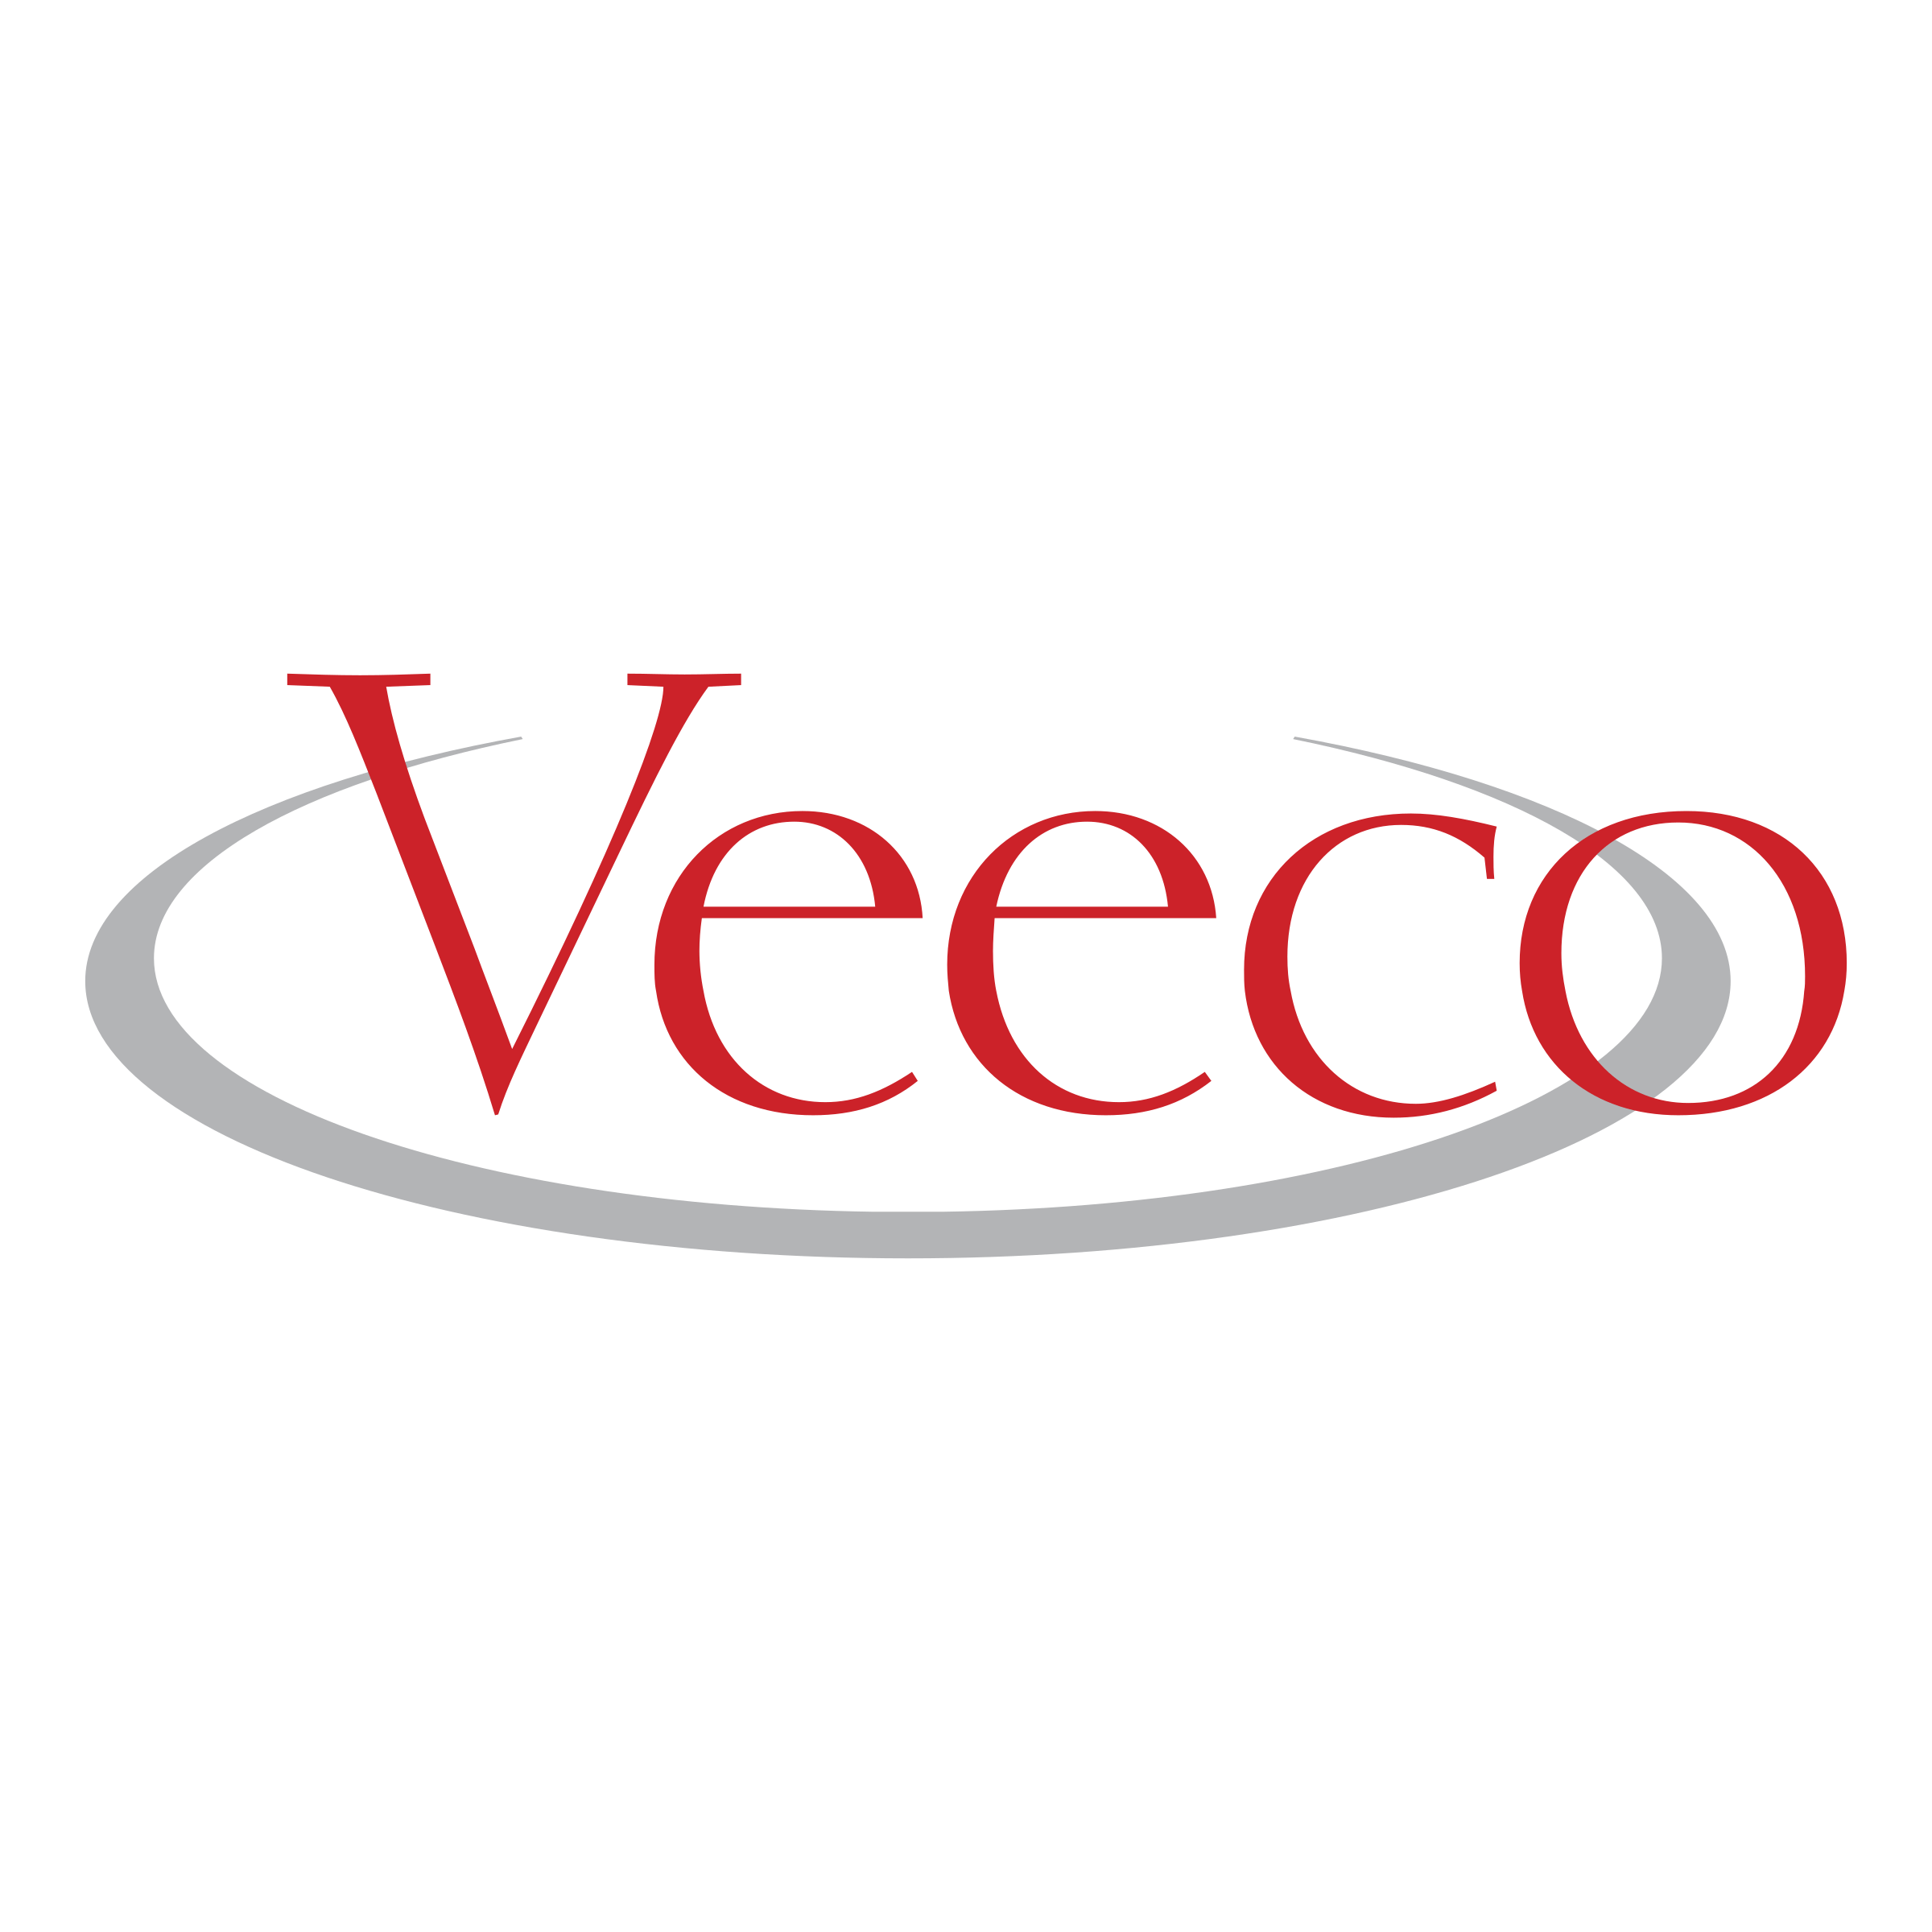 Veeco-logo - LogoDix